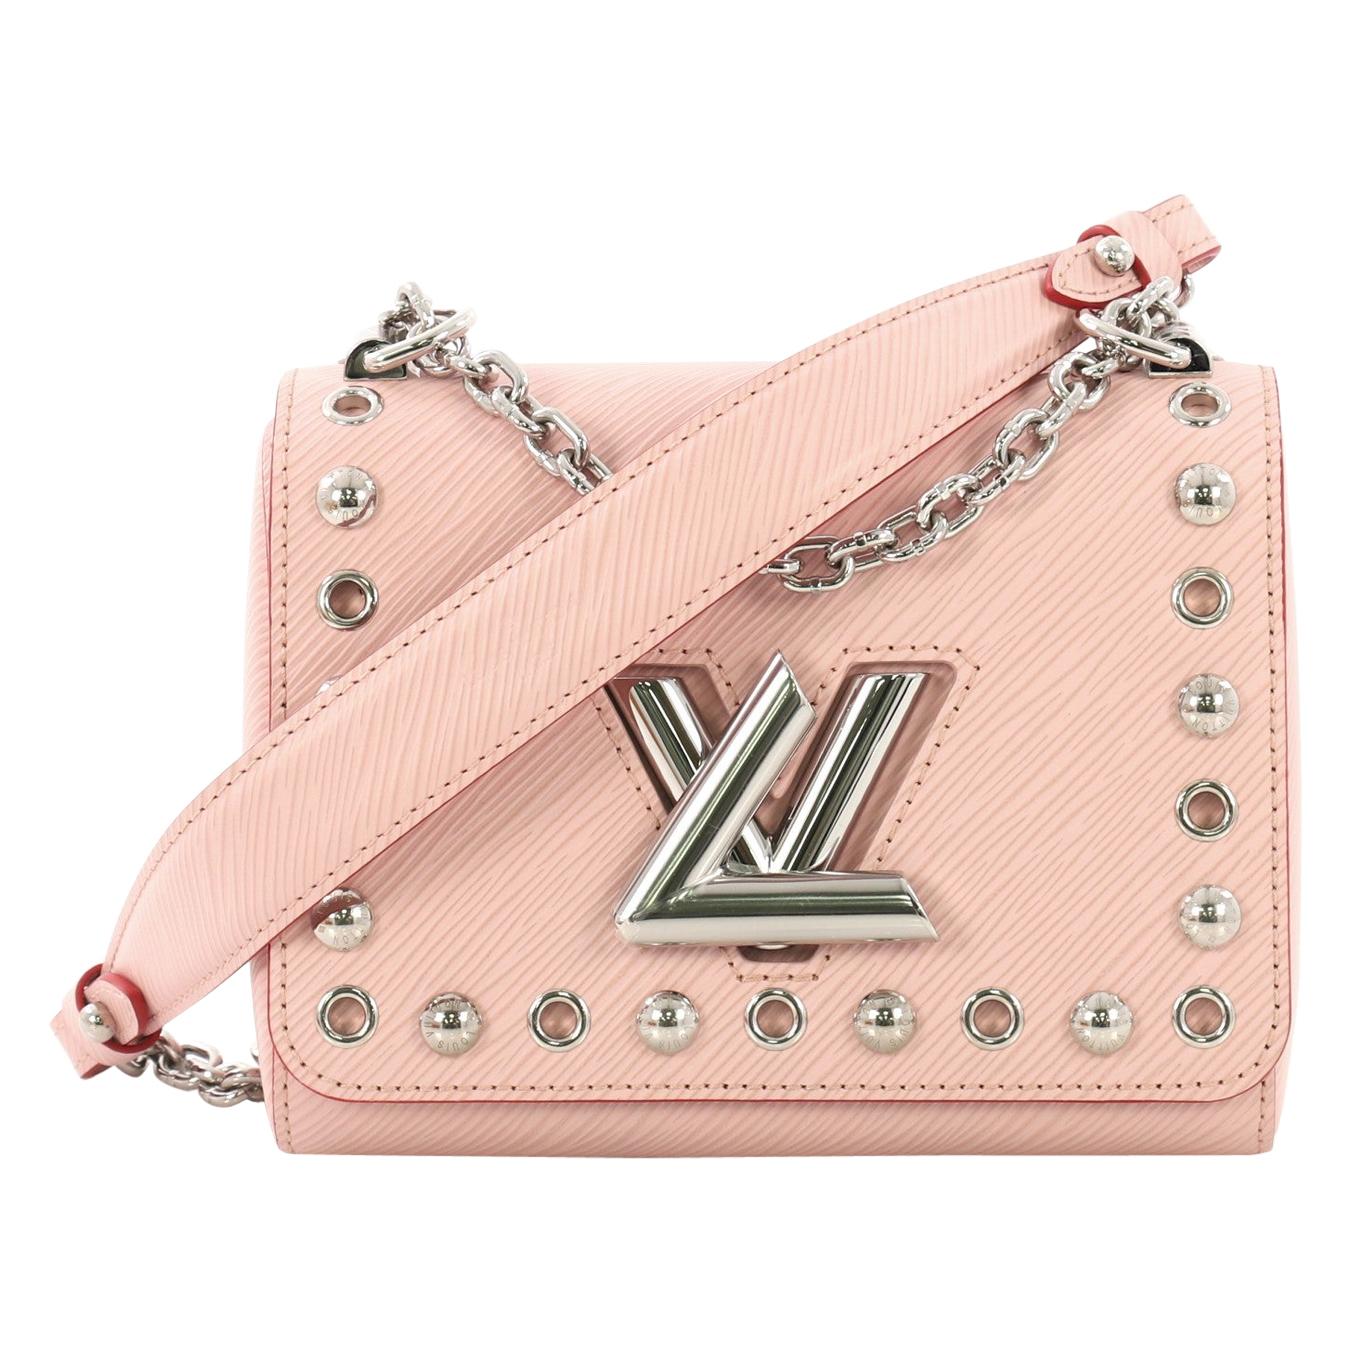 Louis Vuitton Twist Handbag Studded Epi Leather PM